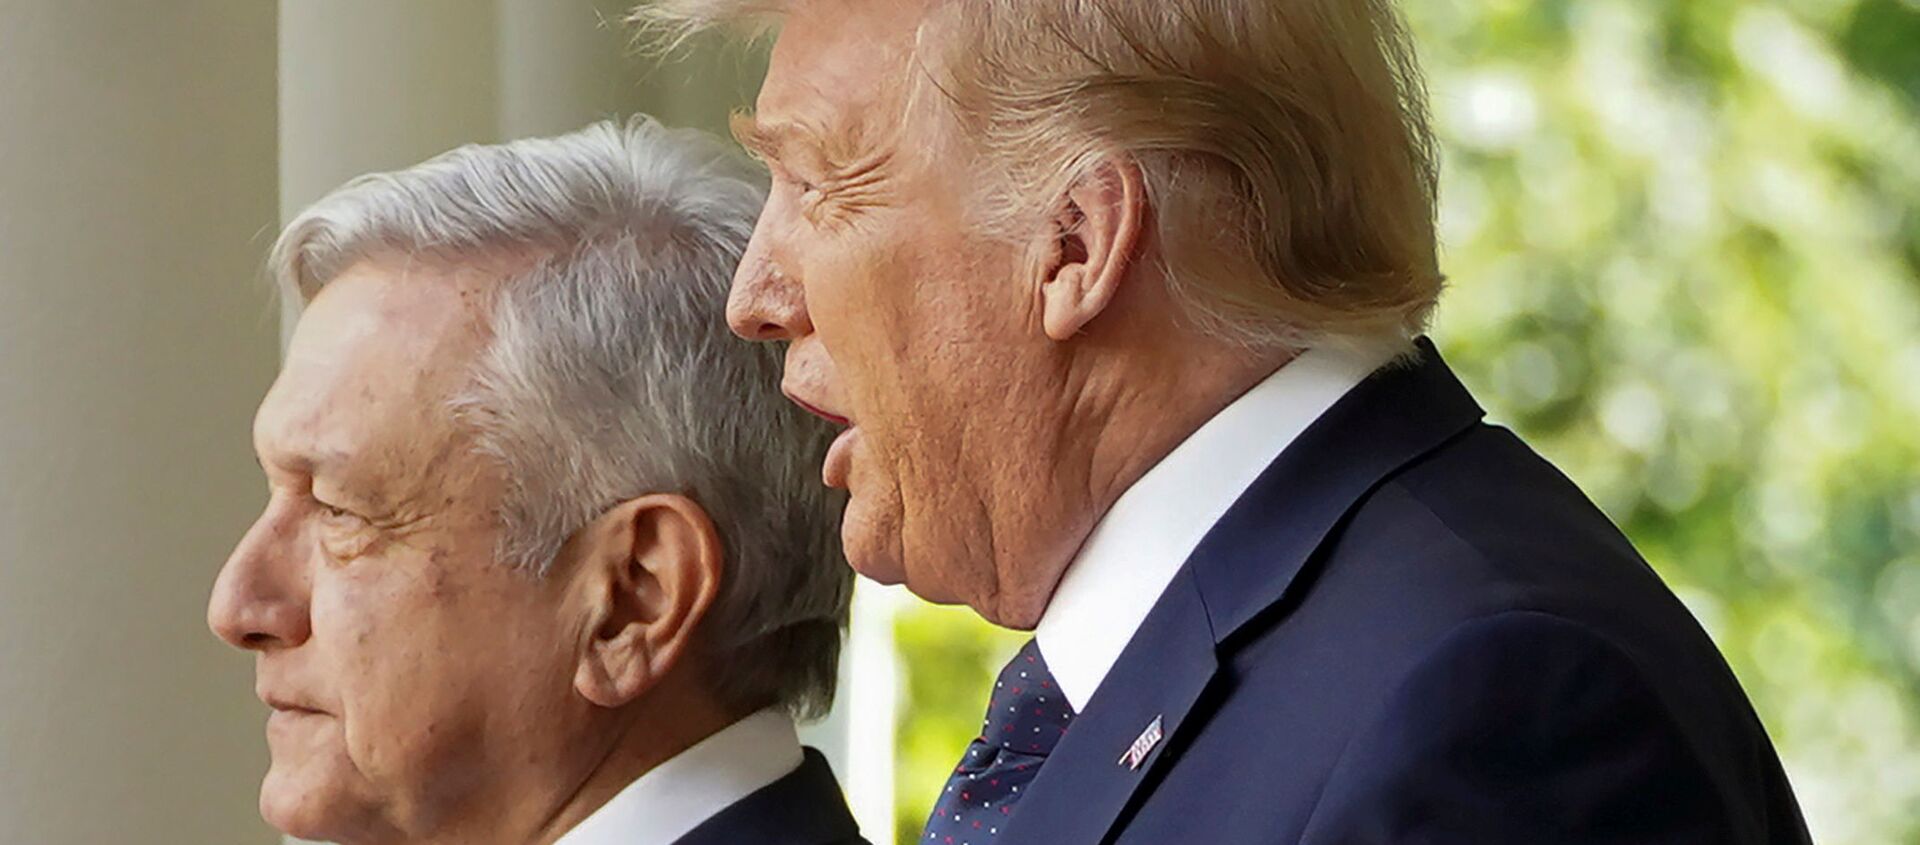 El presidente de México, Andrés Manuel López Obrador, junto a su homólogo estadounidense, Donald Trump - Sputnik Mundo, 1920, 09.07.2020